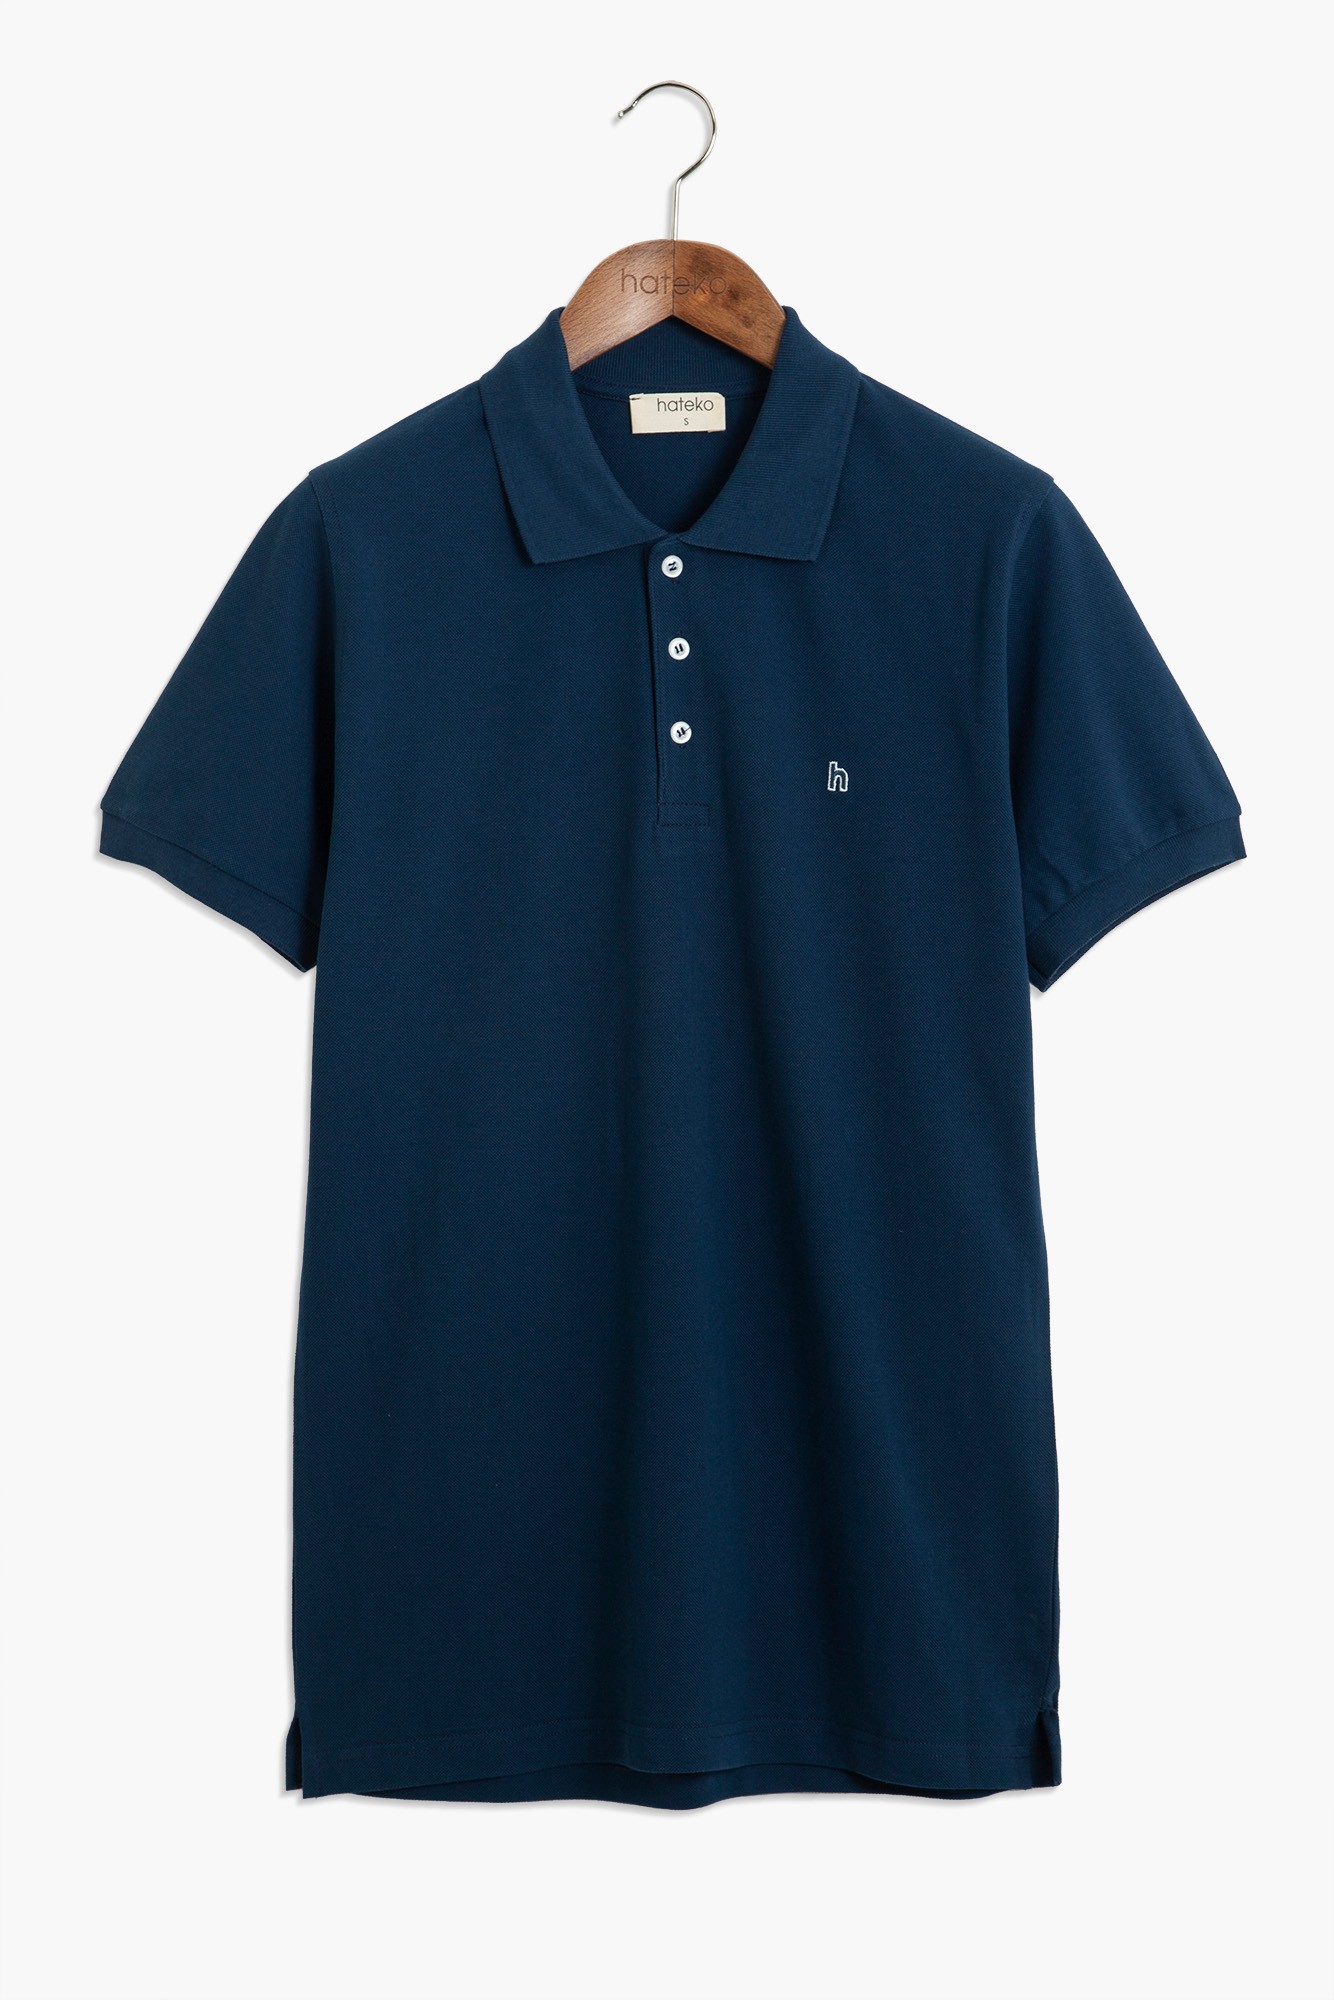 100% Cotton Polo T-Shirt - Light Navy